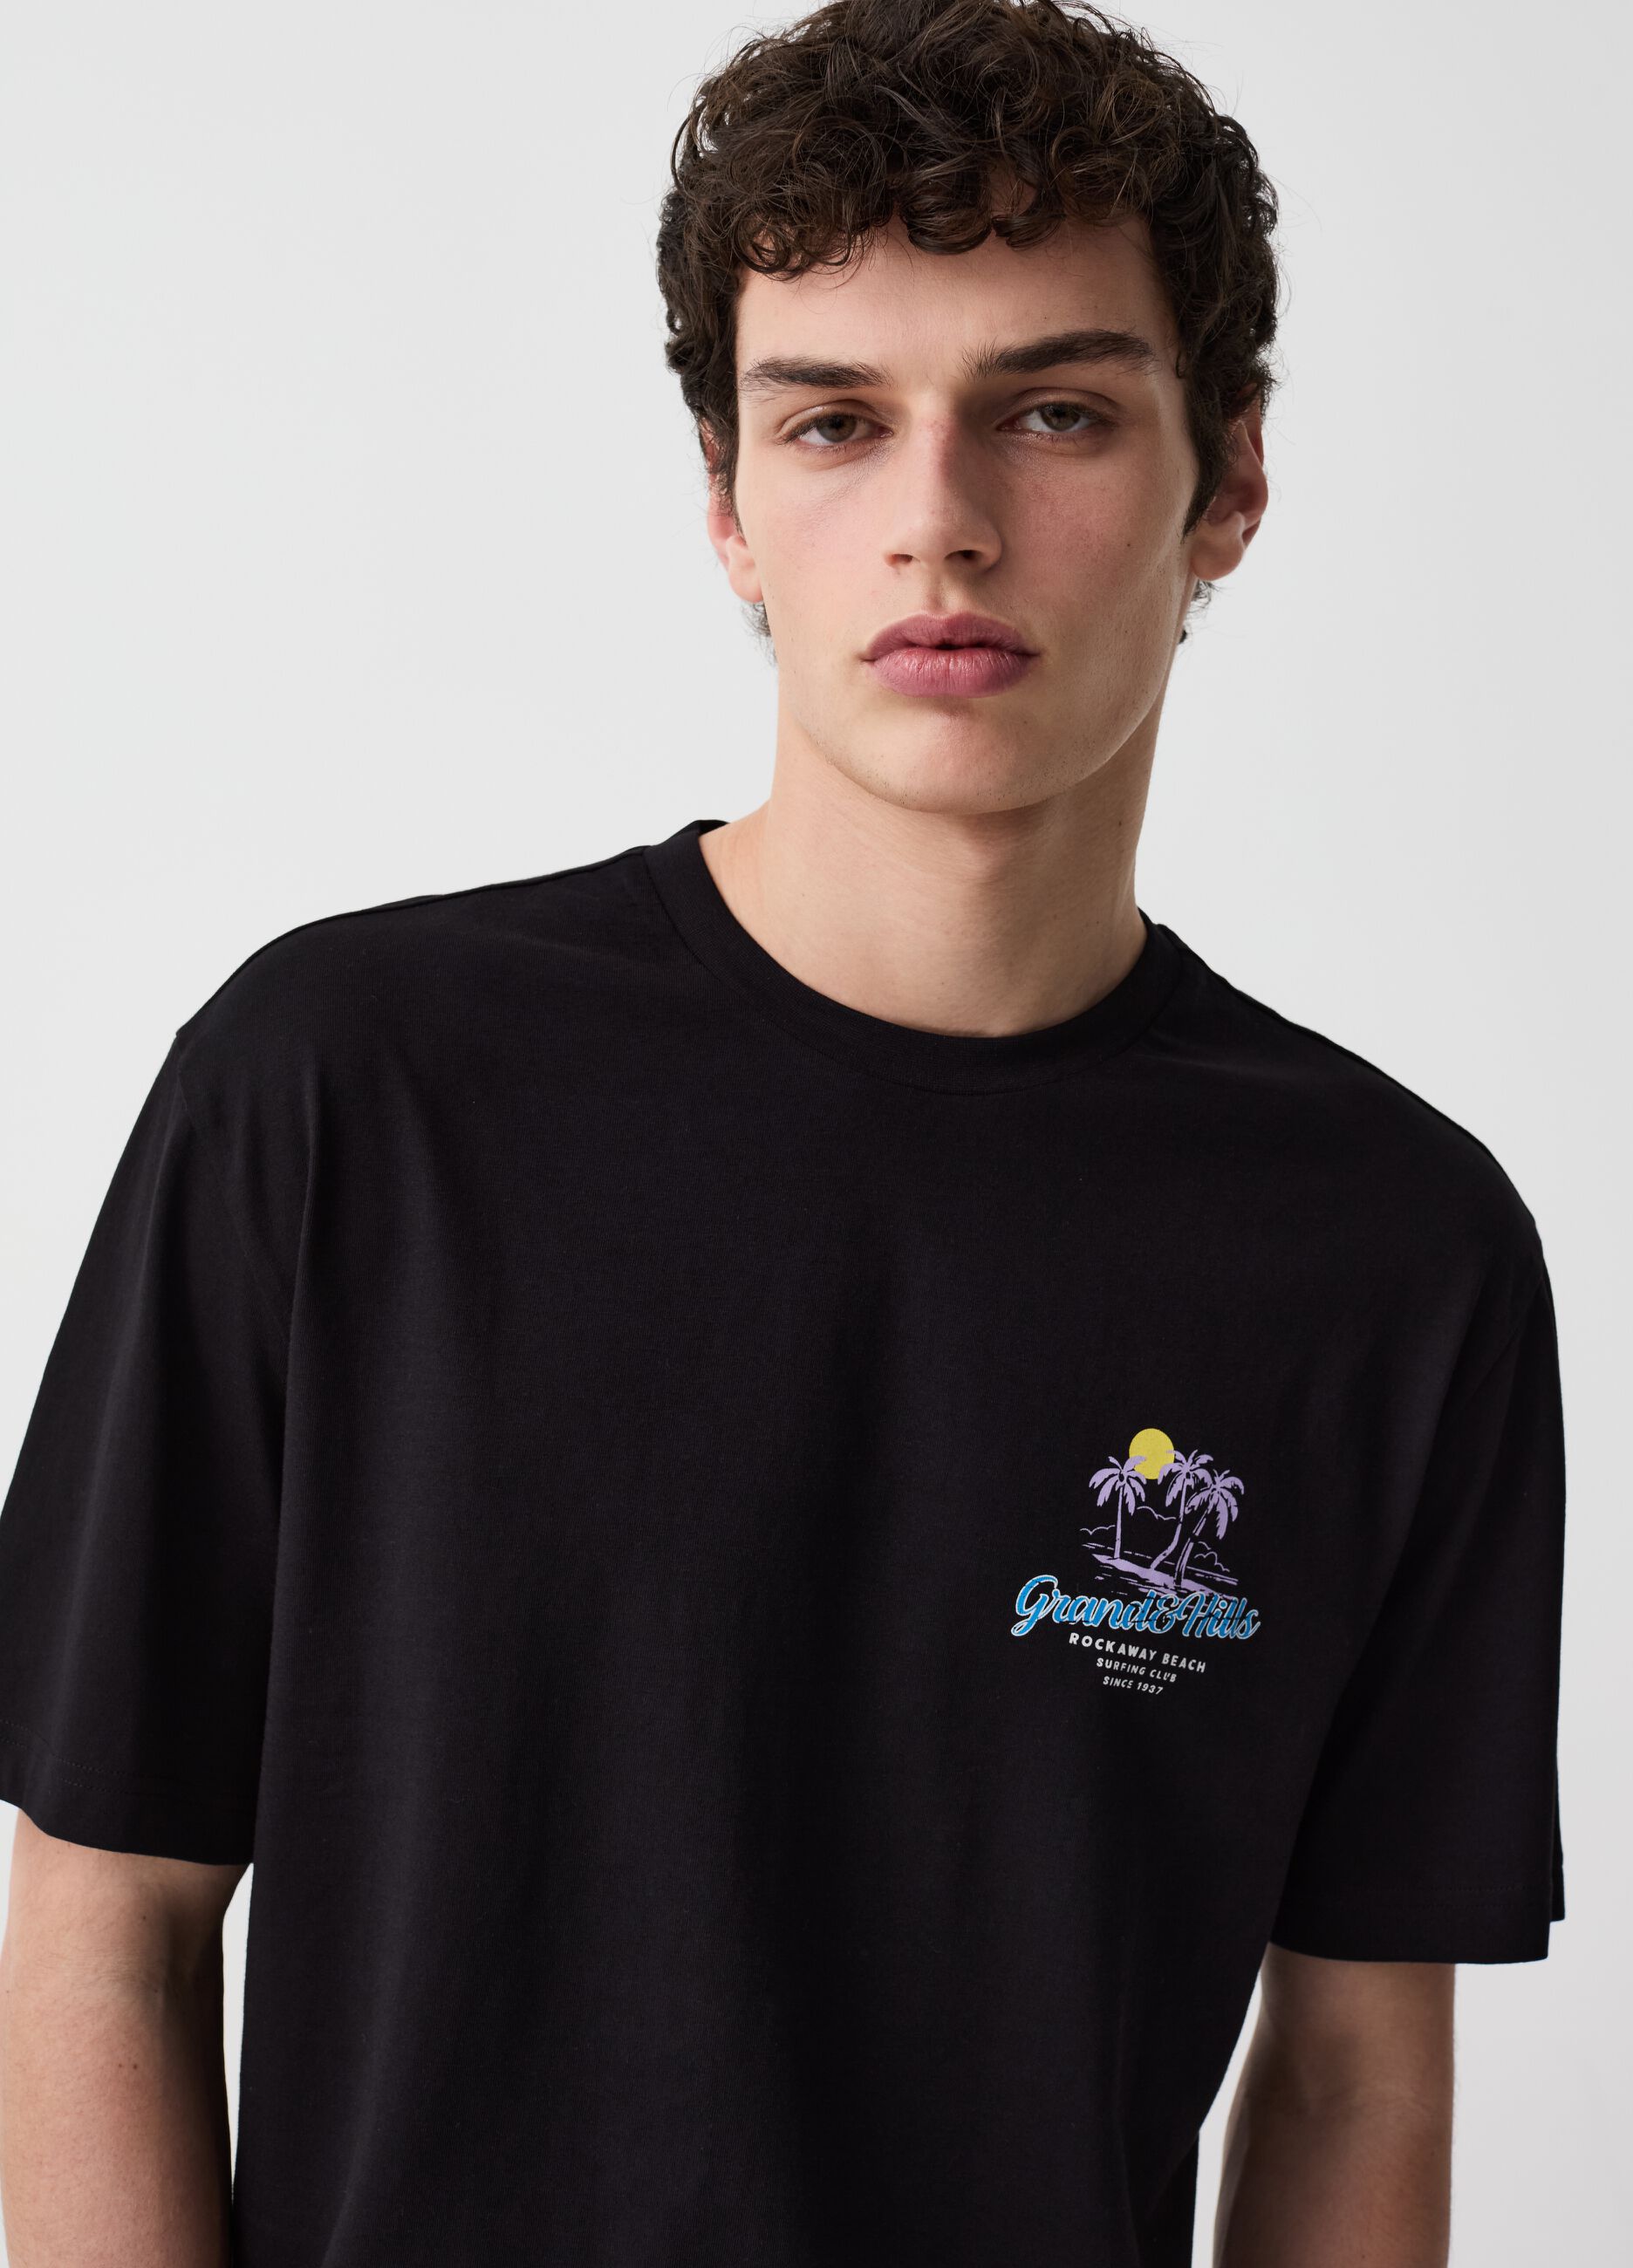 T-shirt stampa Rockway Beach Surfing Club